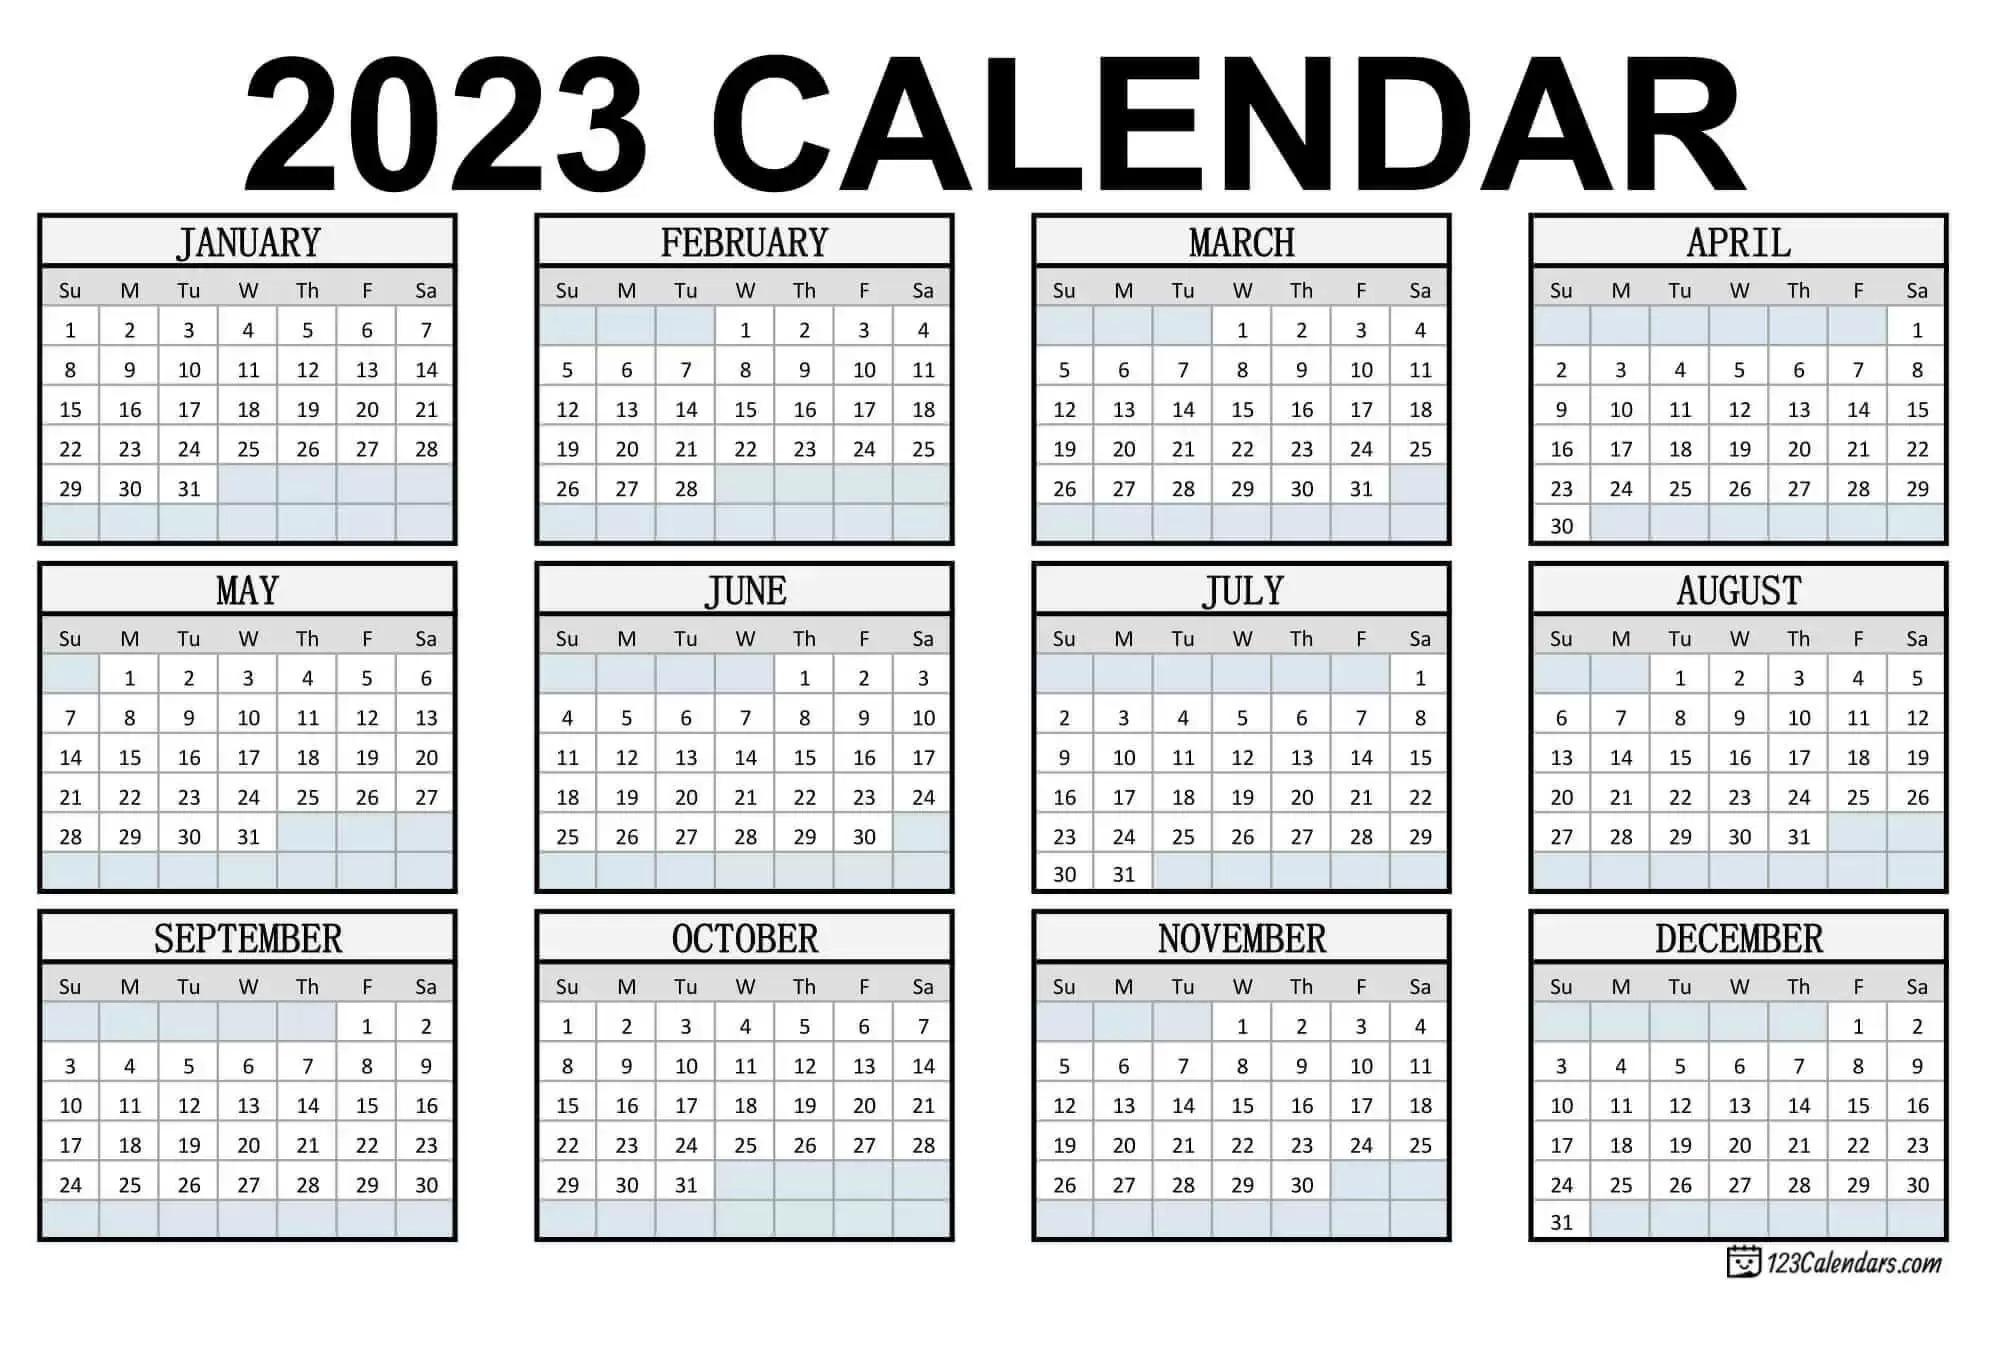 Free 2023 Calendars